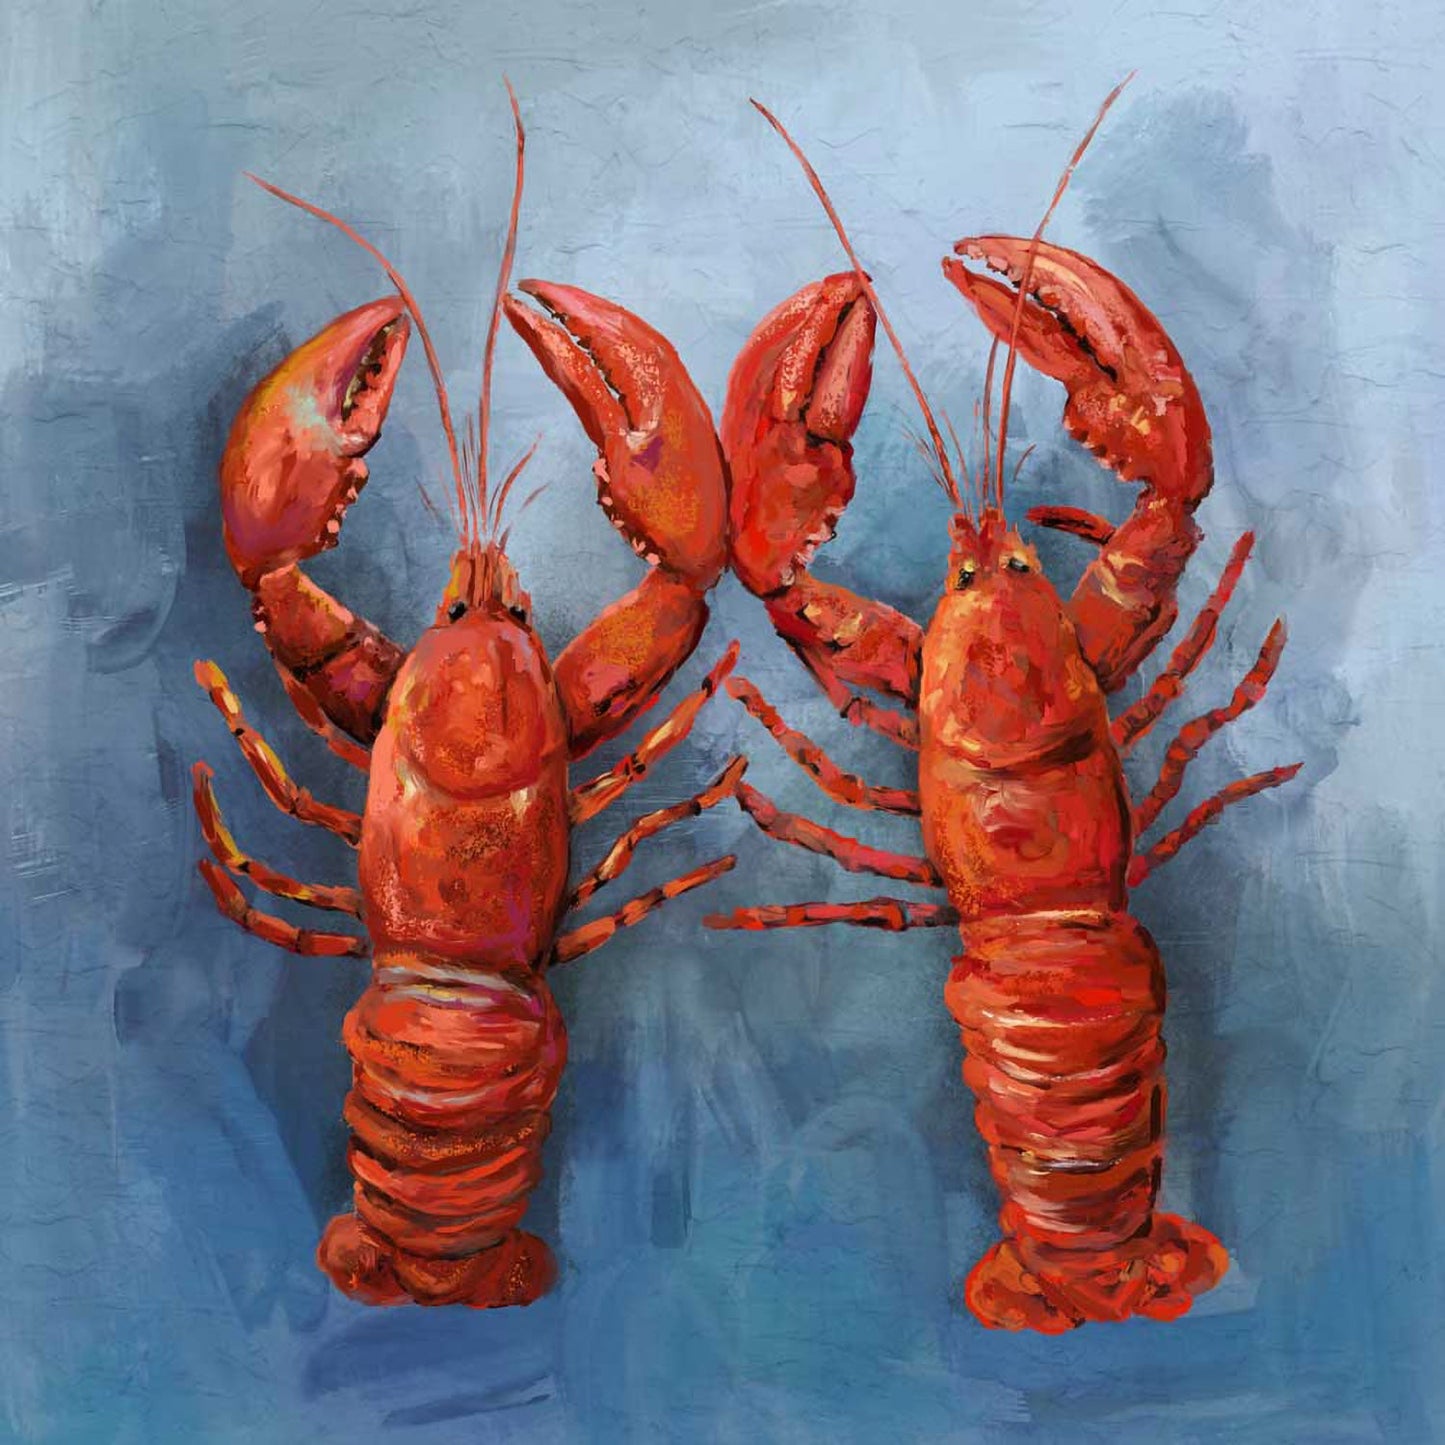 Coastal Locals - Lobster Pair Canvas Wall Art